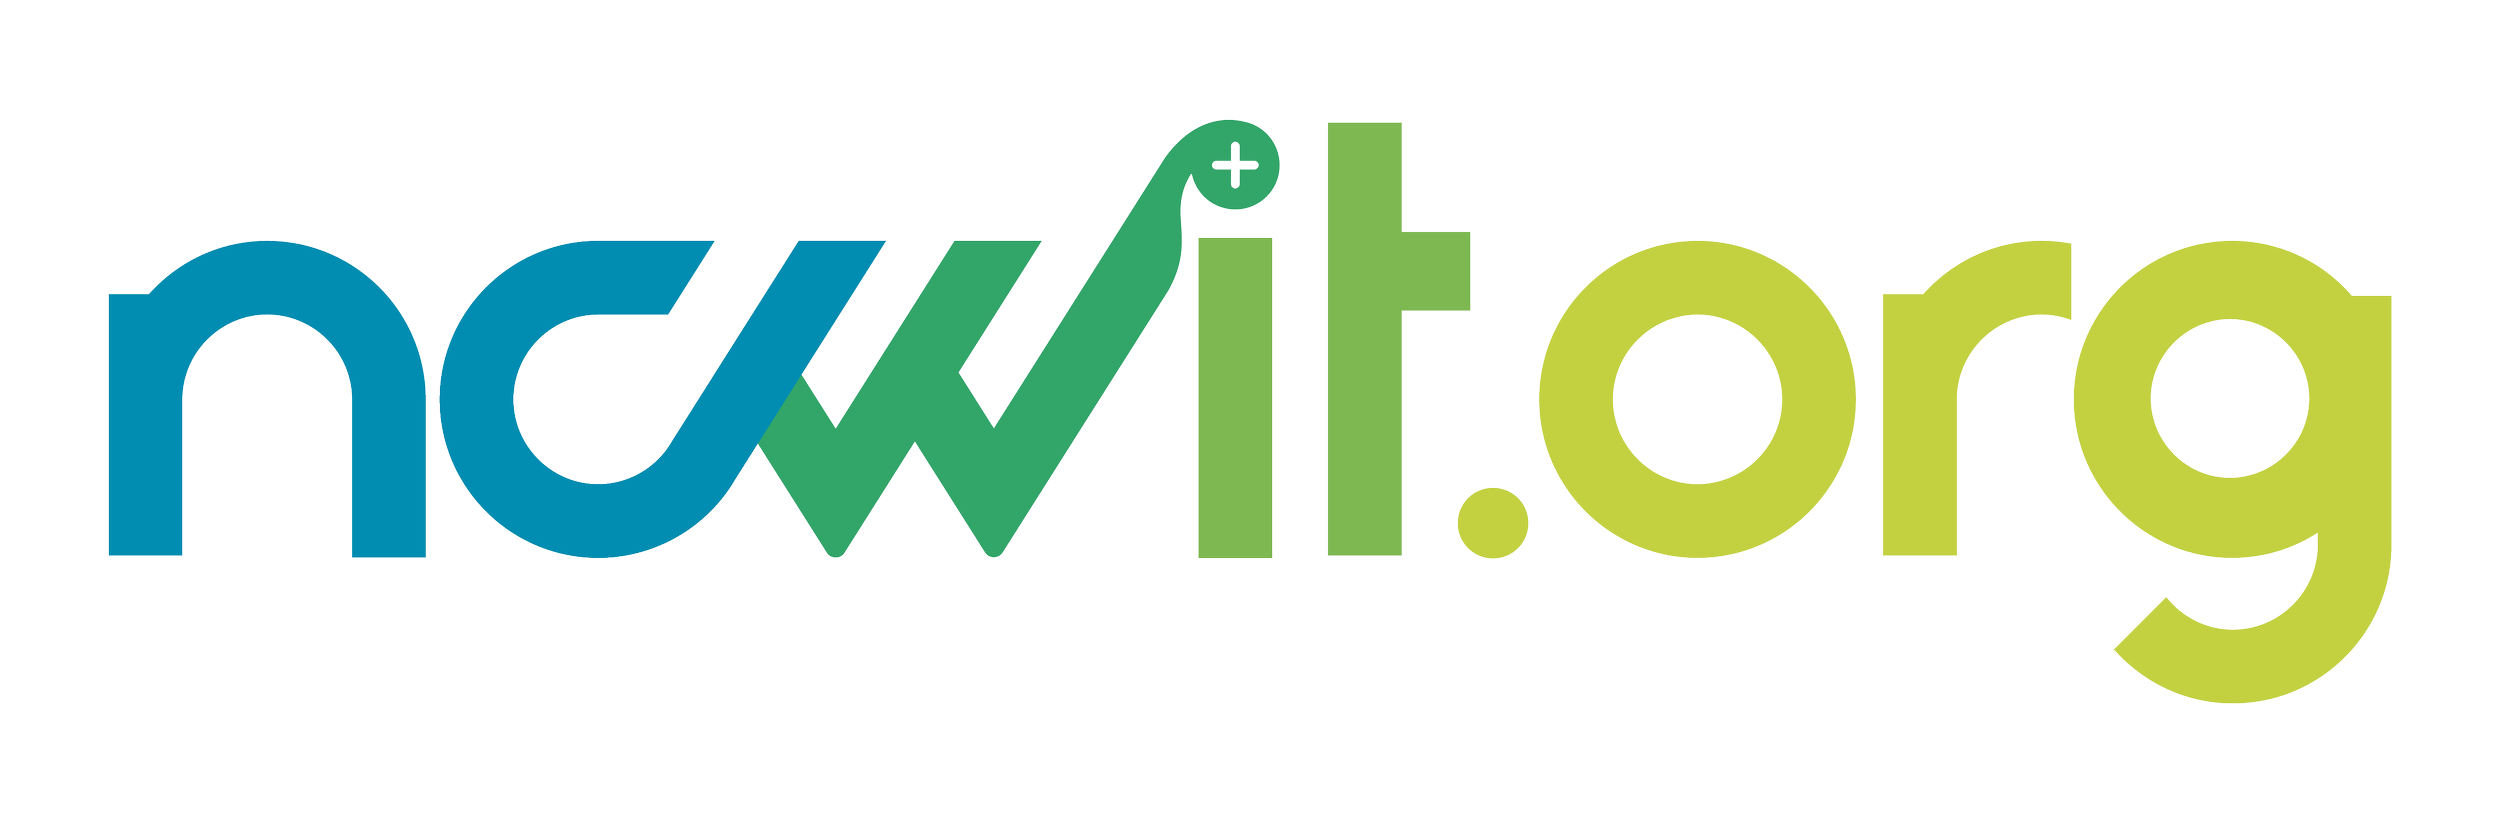 NCWIT Full Color Logo.png